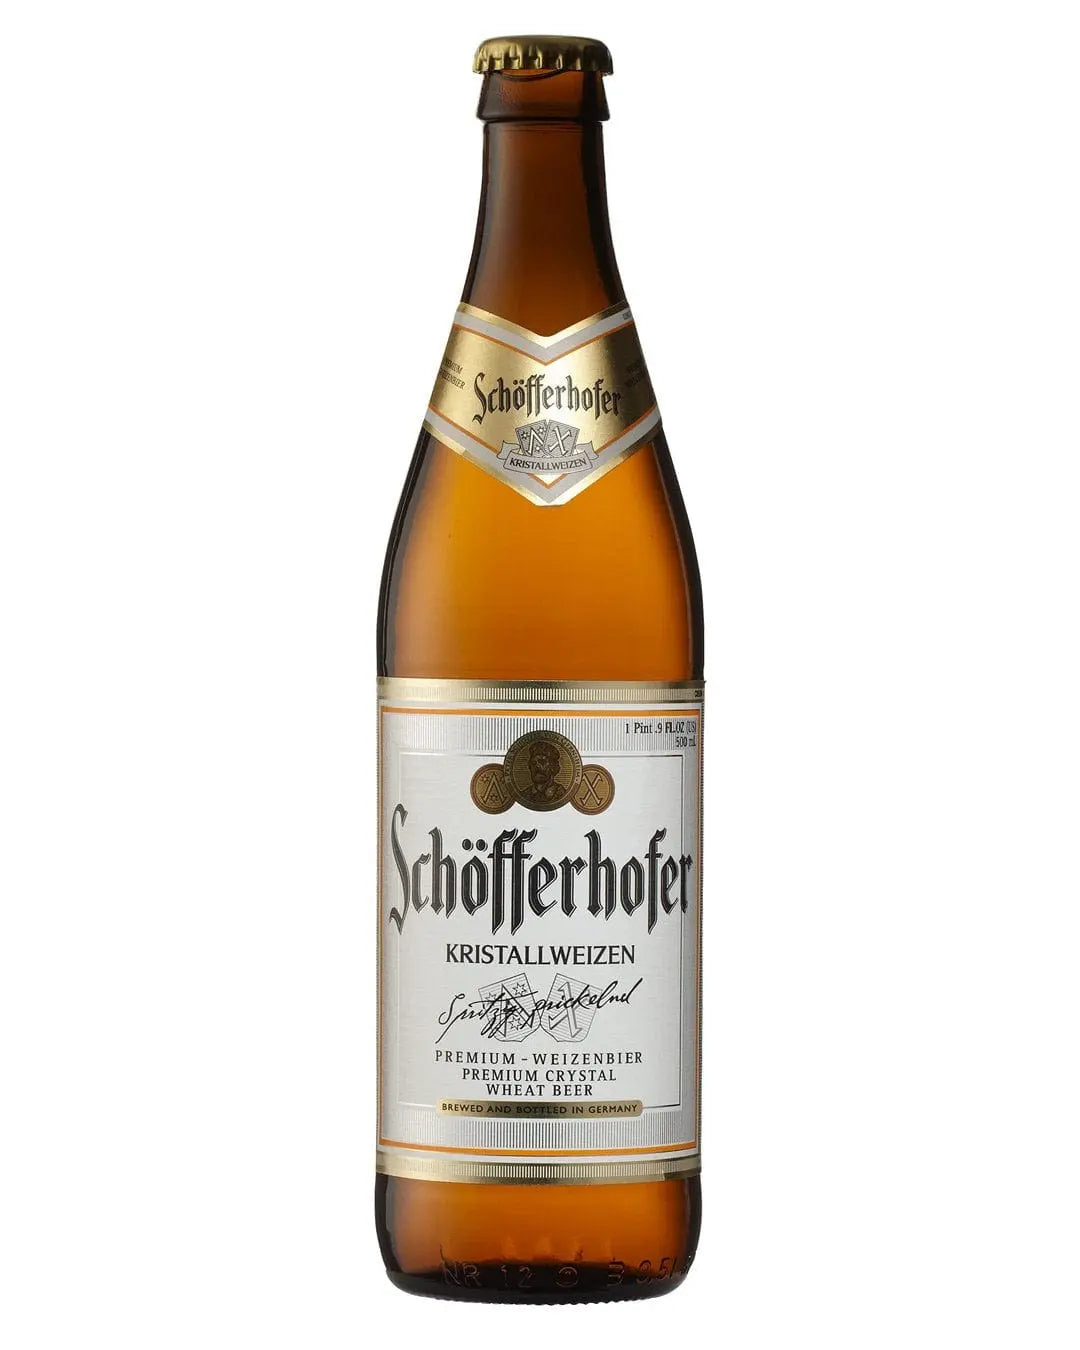 Schofferhofer Kristallweizen Beer, 500 ml Beer